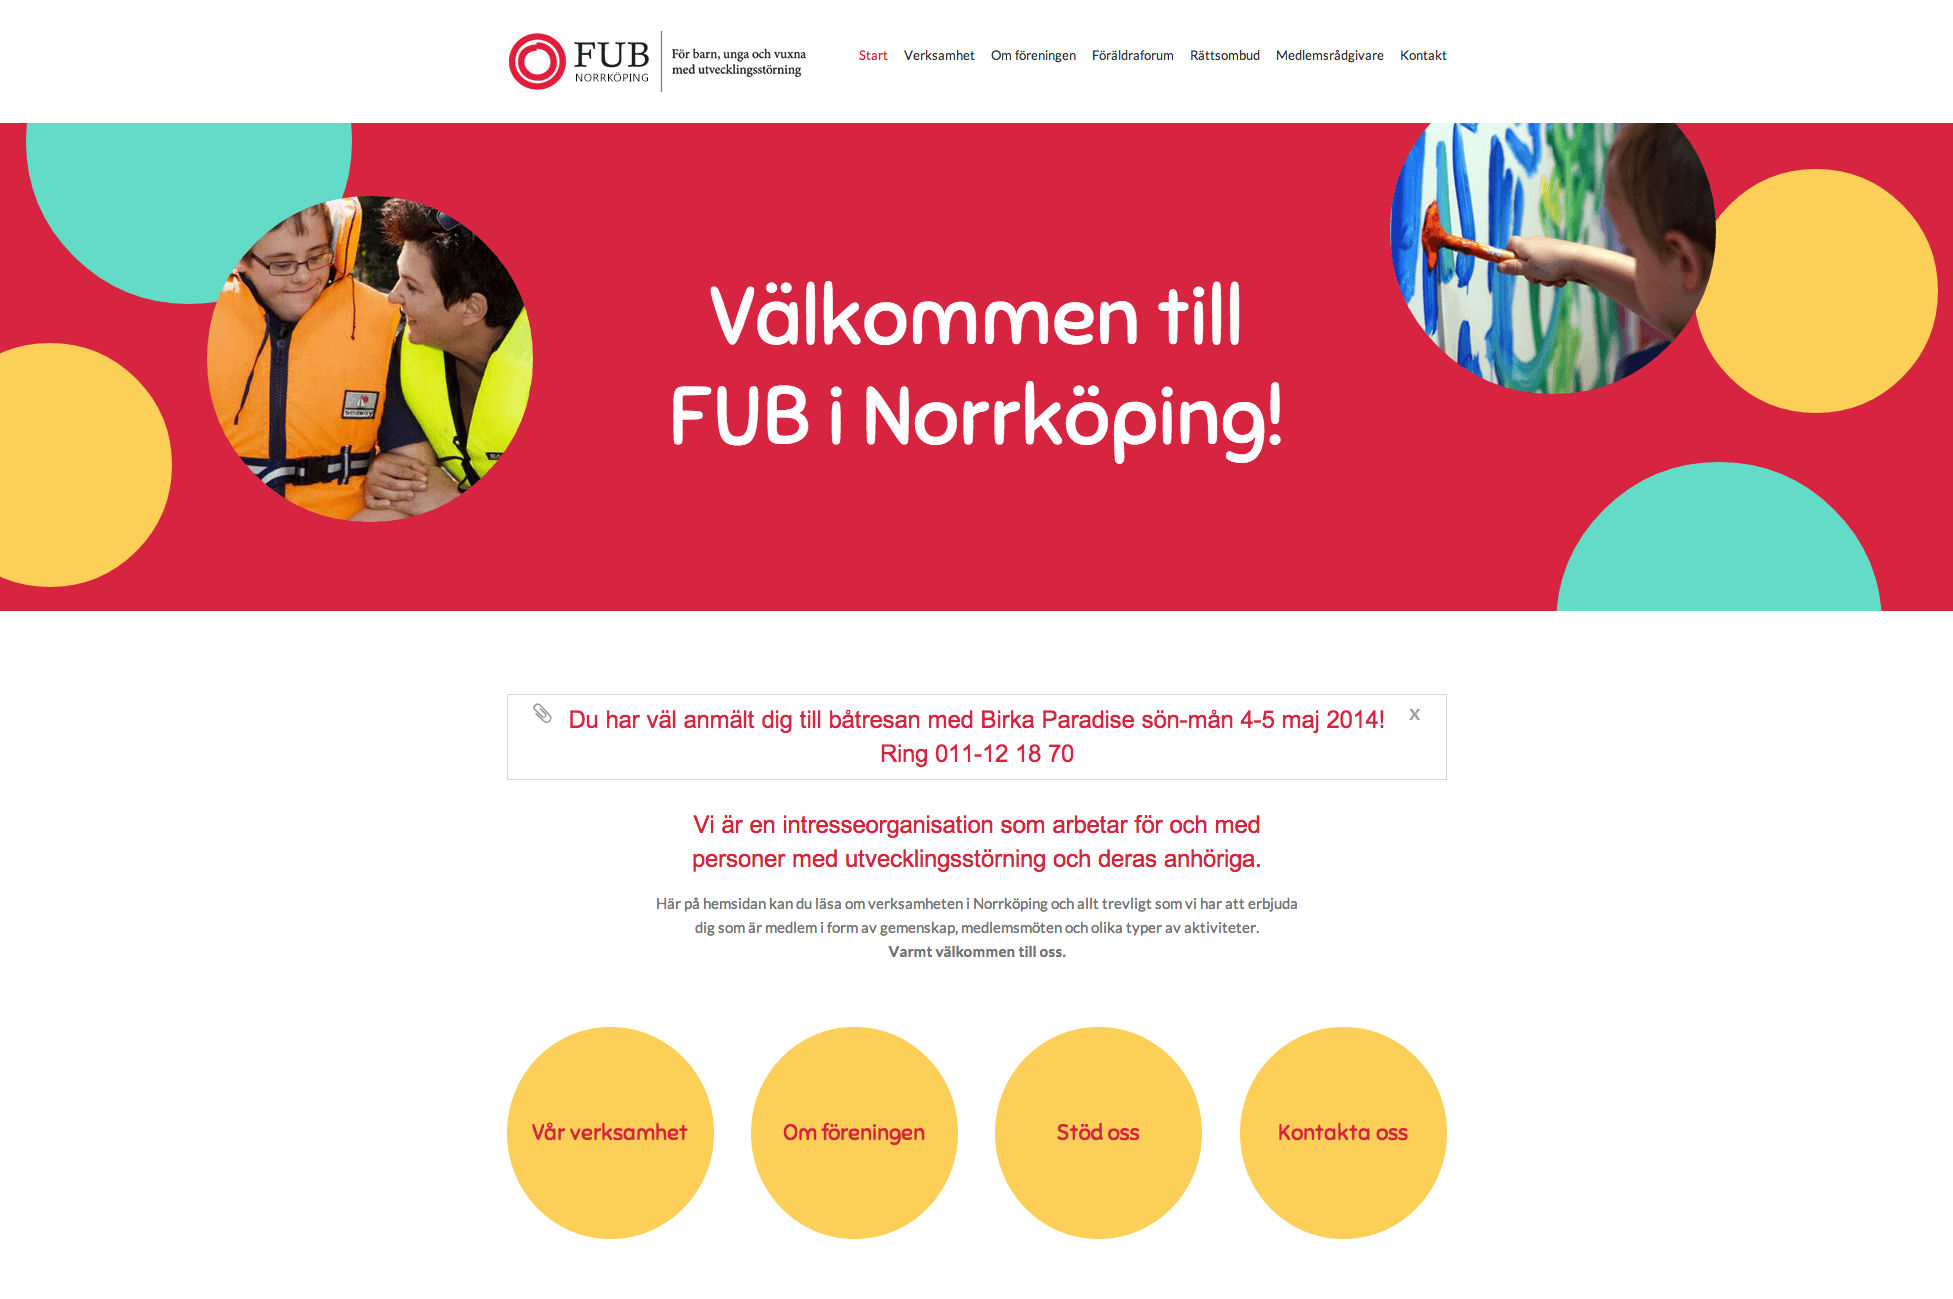 FUB i Norrköping